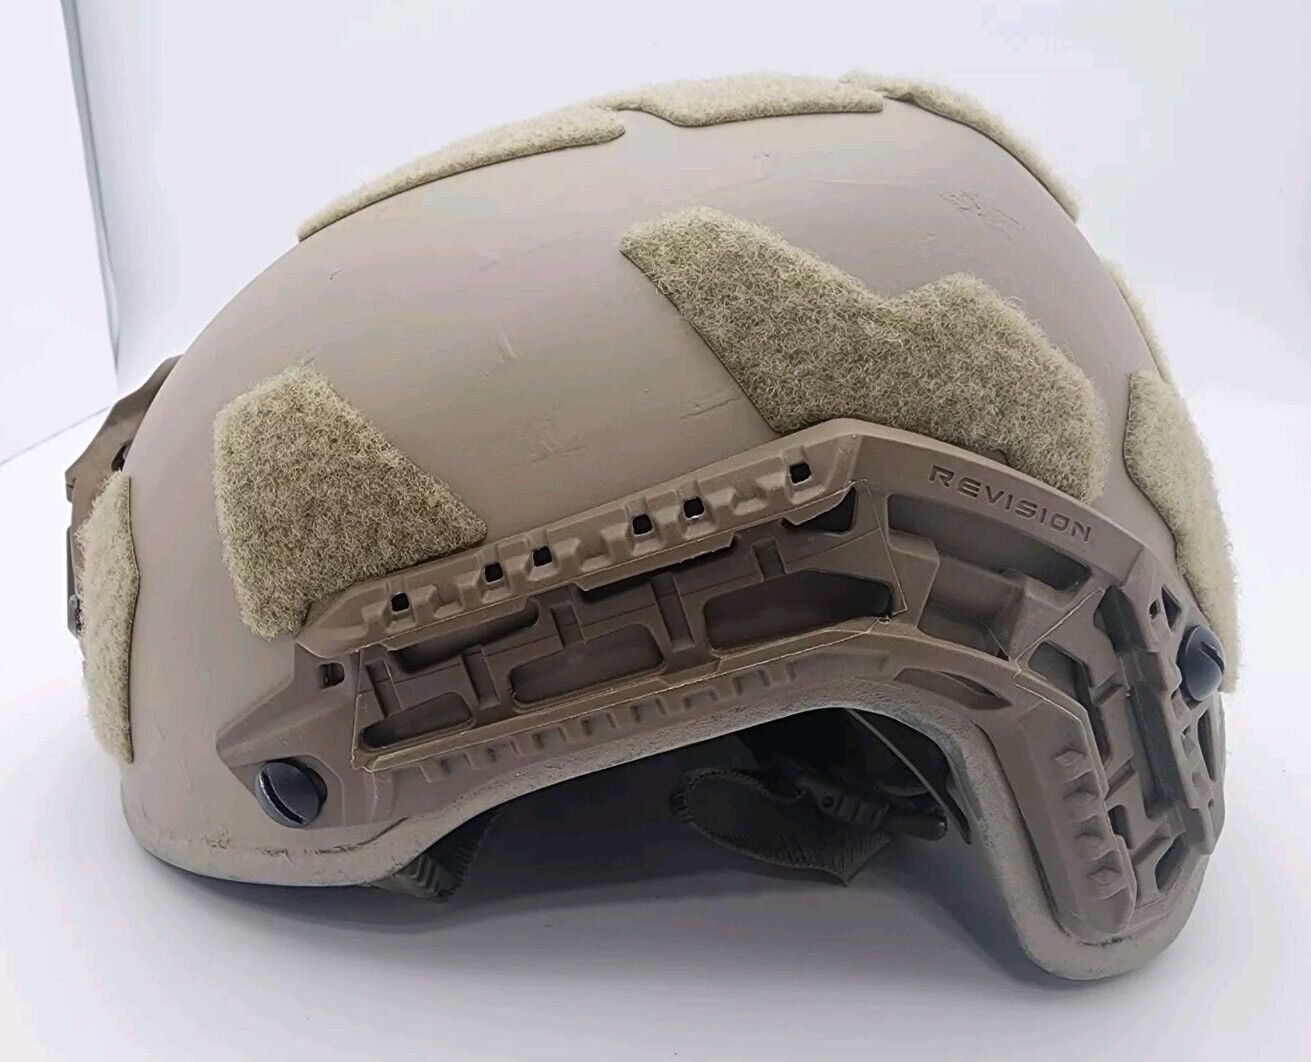 Galvion Caiman Ballistic Helmet, Ranger Green/Tan Painted, Size L